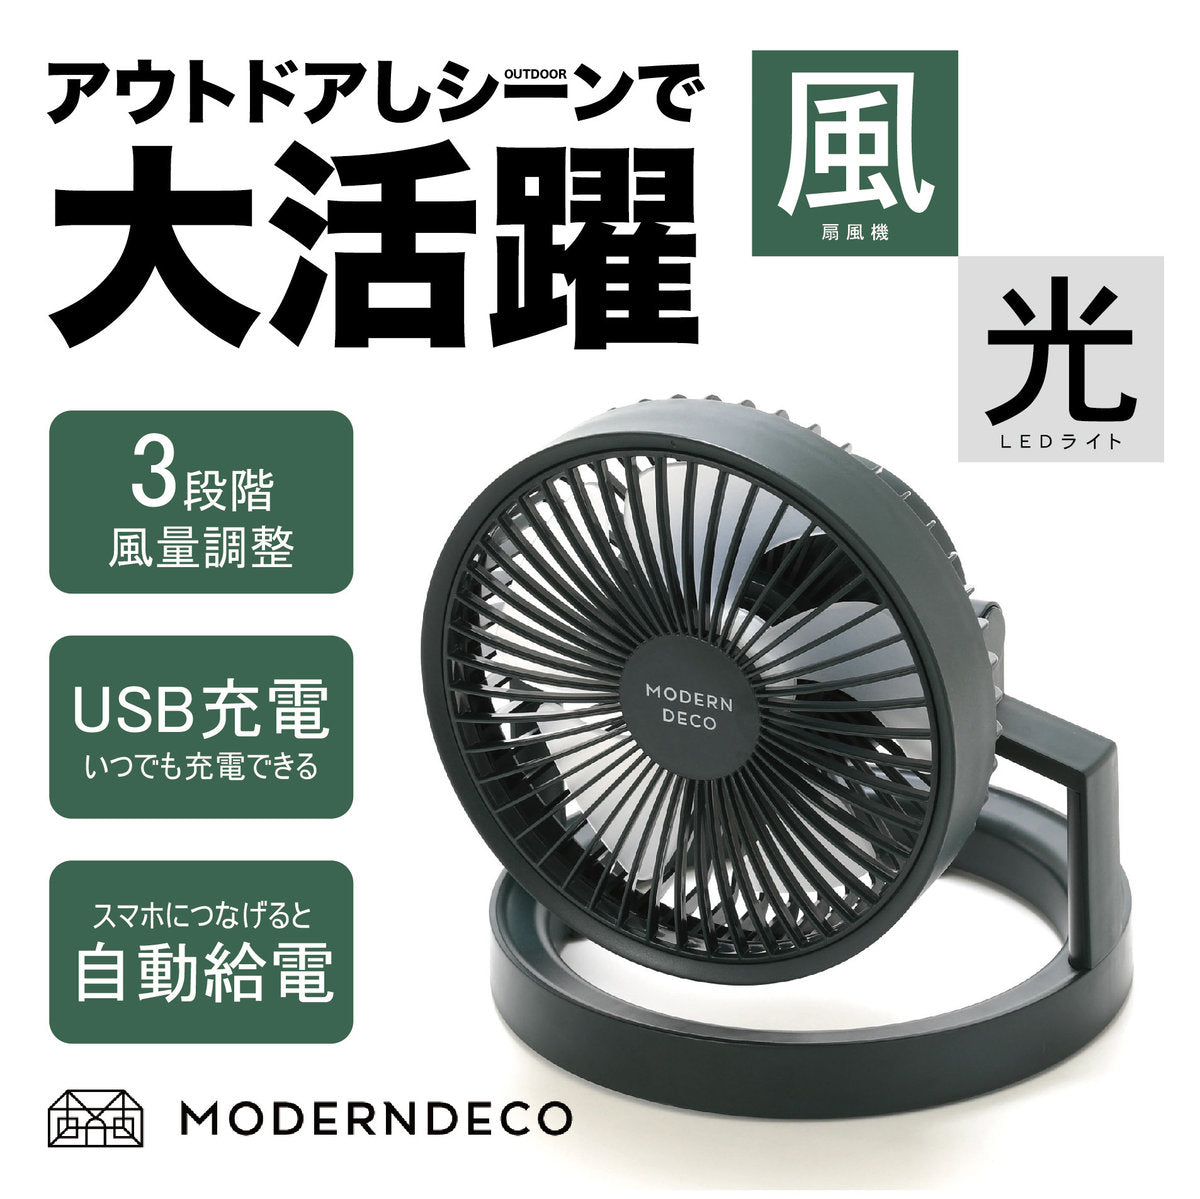 MODERN DECO - 多功能LED光環無線風扇 MOD10